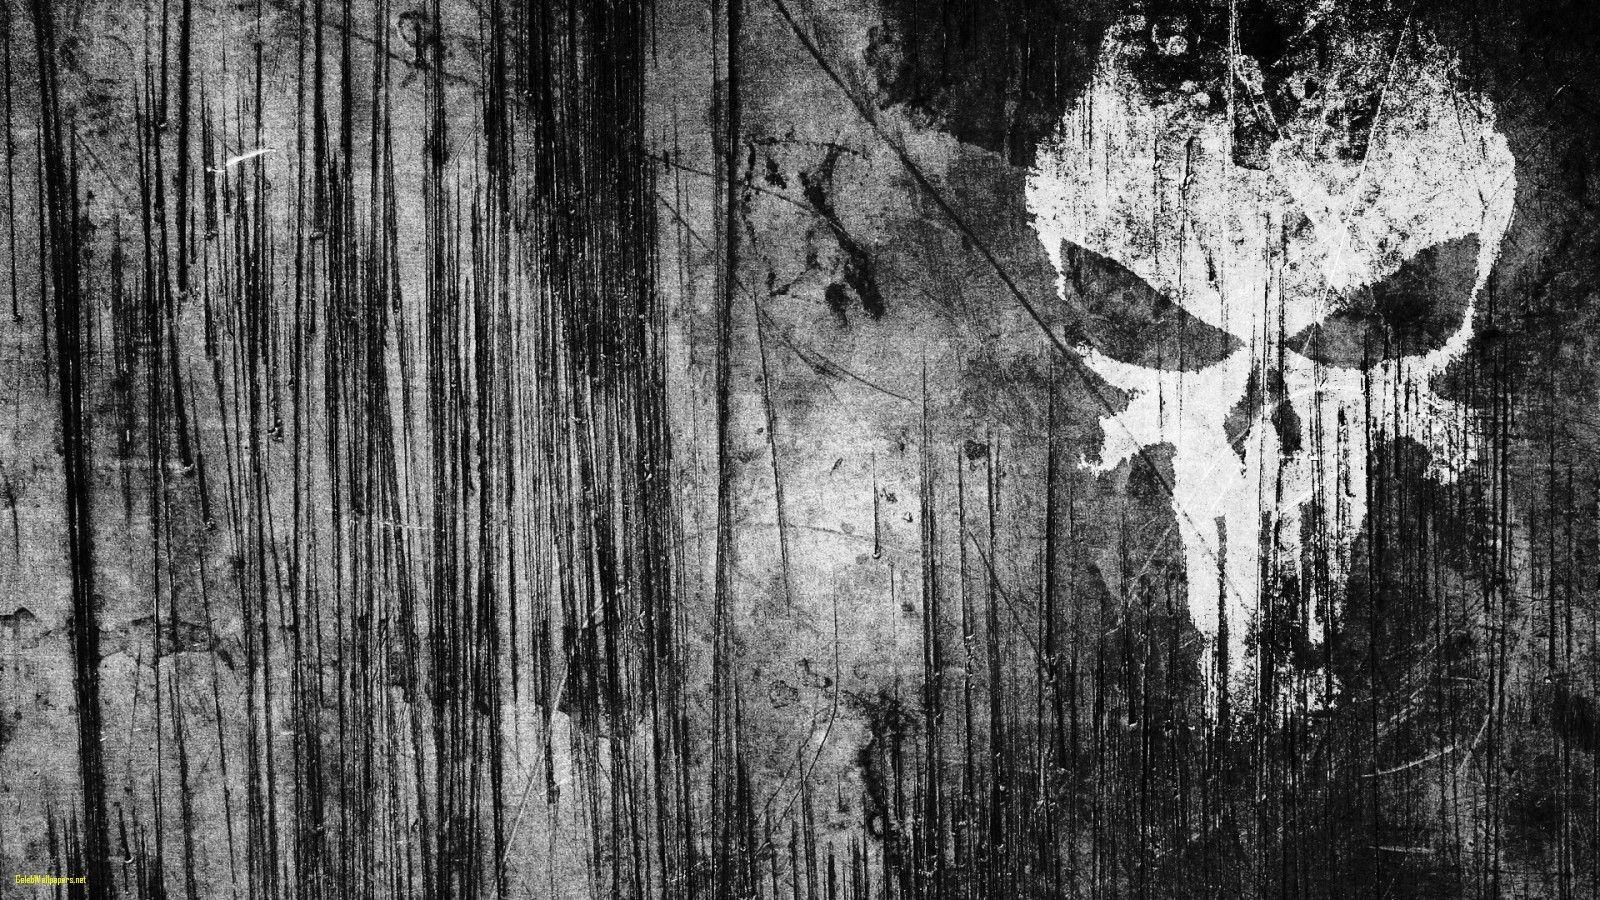 The Punisher - Wallpaper wallpaper, 1600x900, 249584